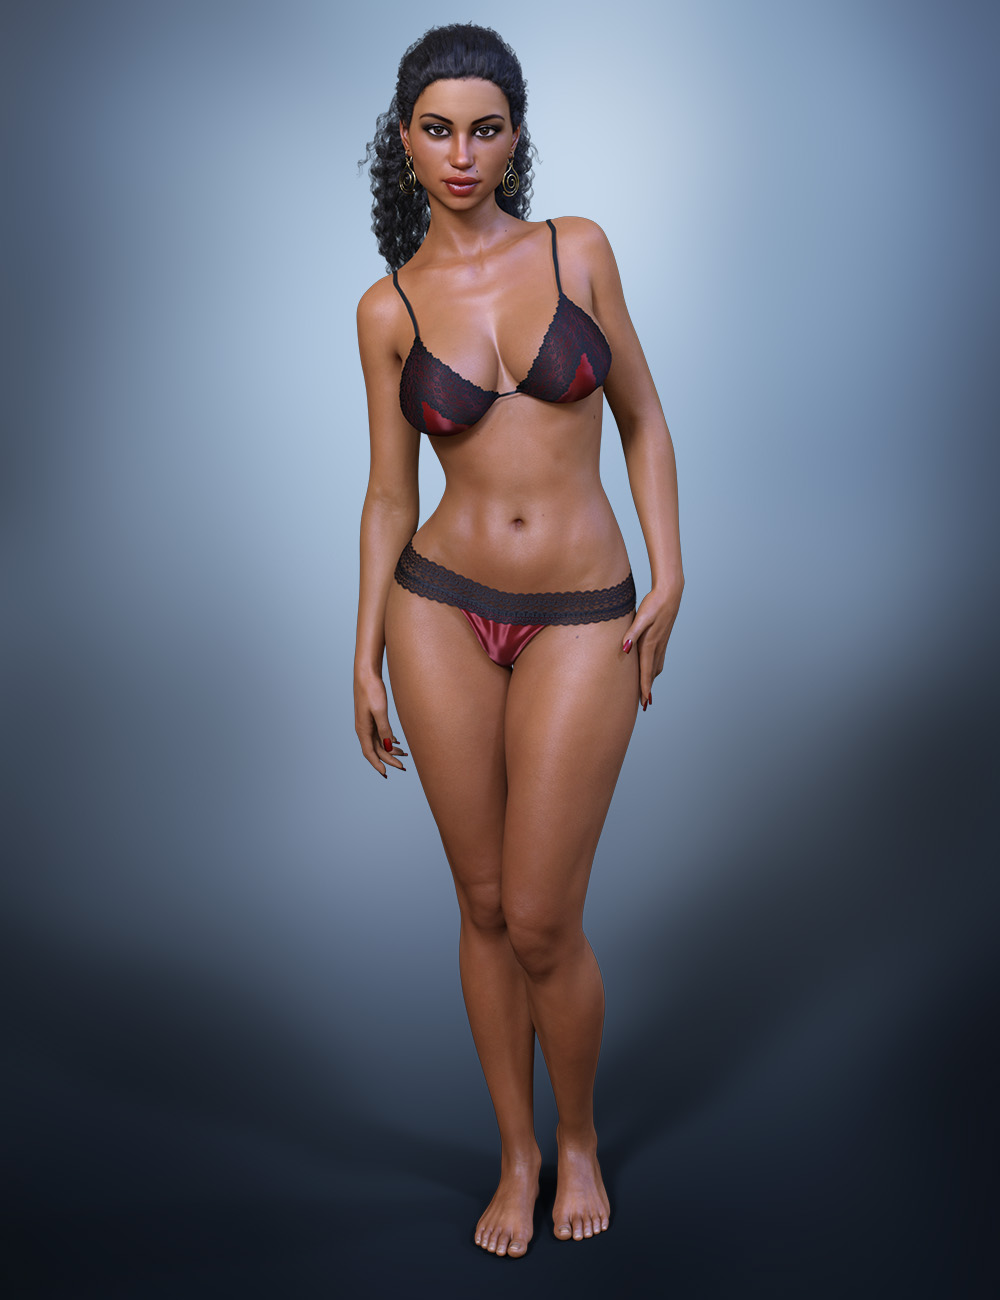 FWSA Shiloh HD for Lilith 7 by: Fred Winkler ArtSabby, 3D Models by Daz 3D